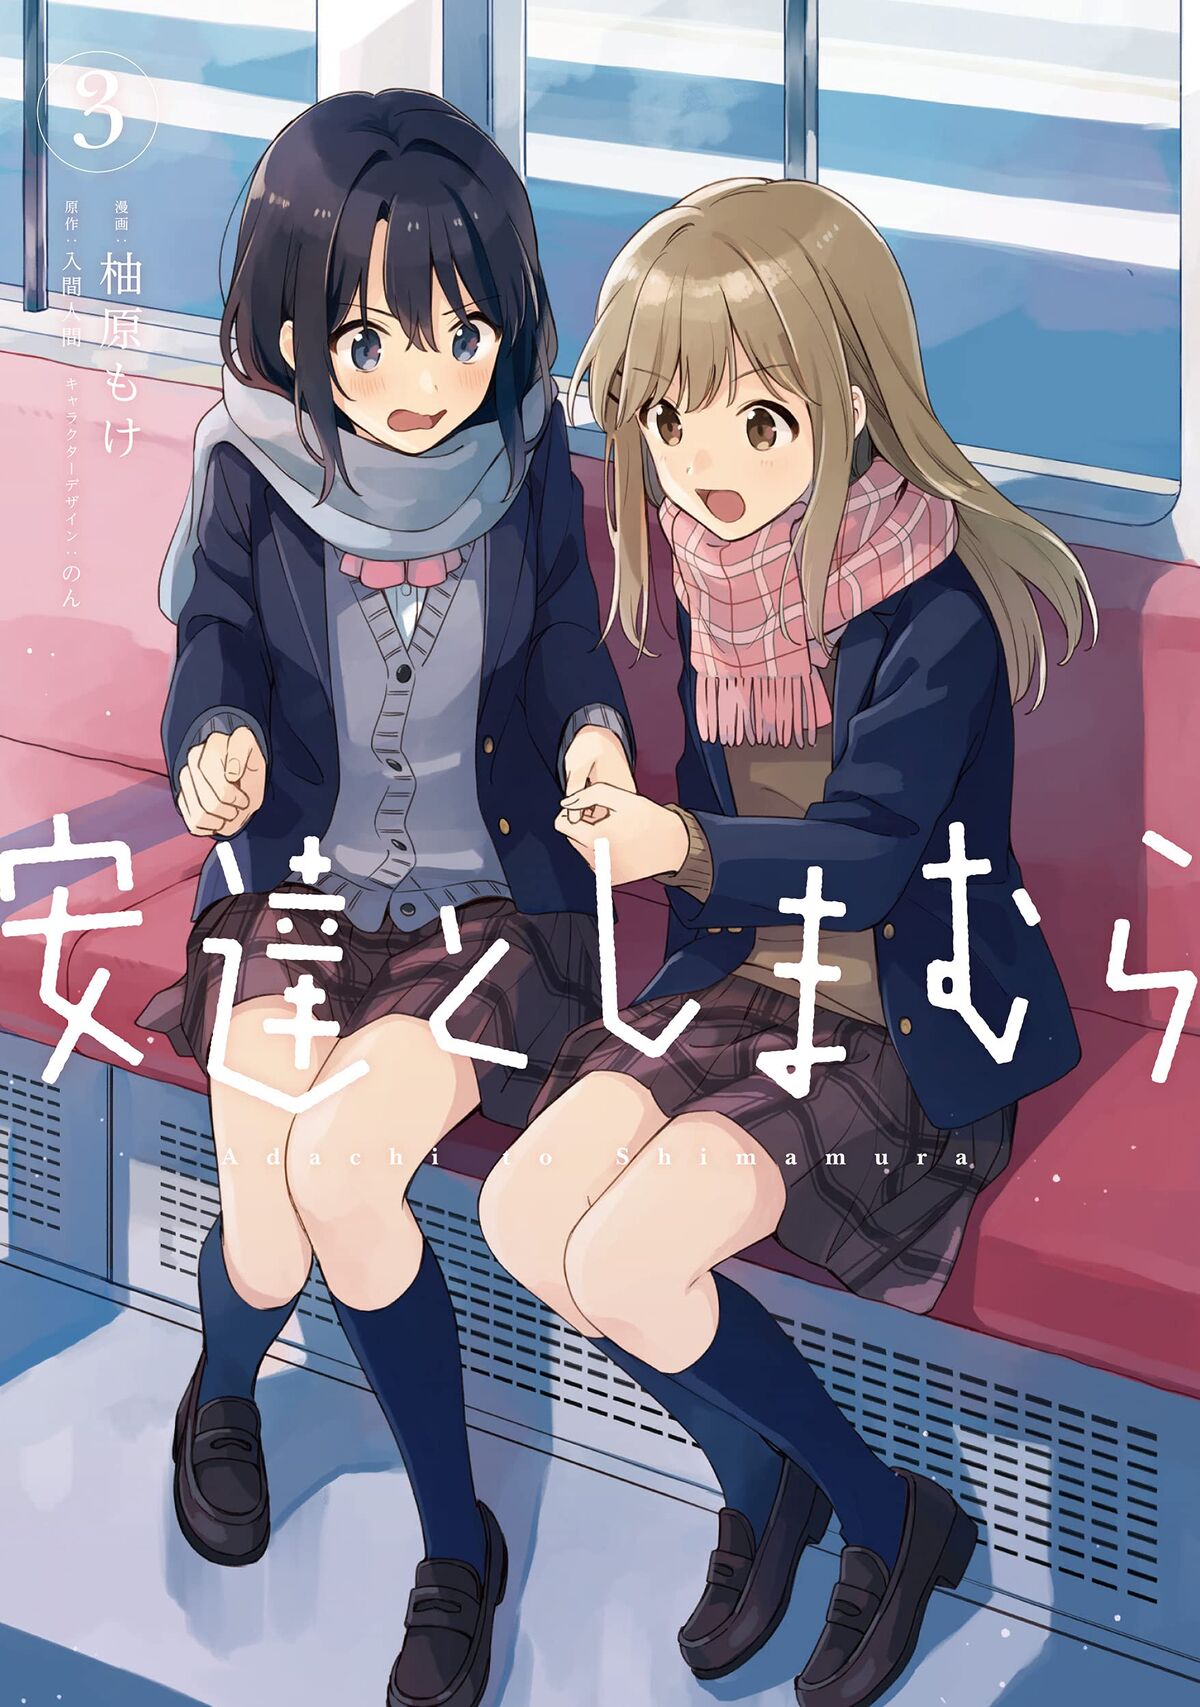 ♞ — LGBTQ Light Novel Review - Adachi and Shimamura